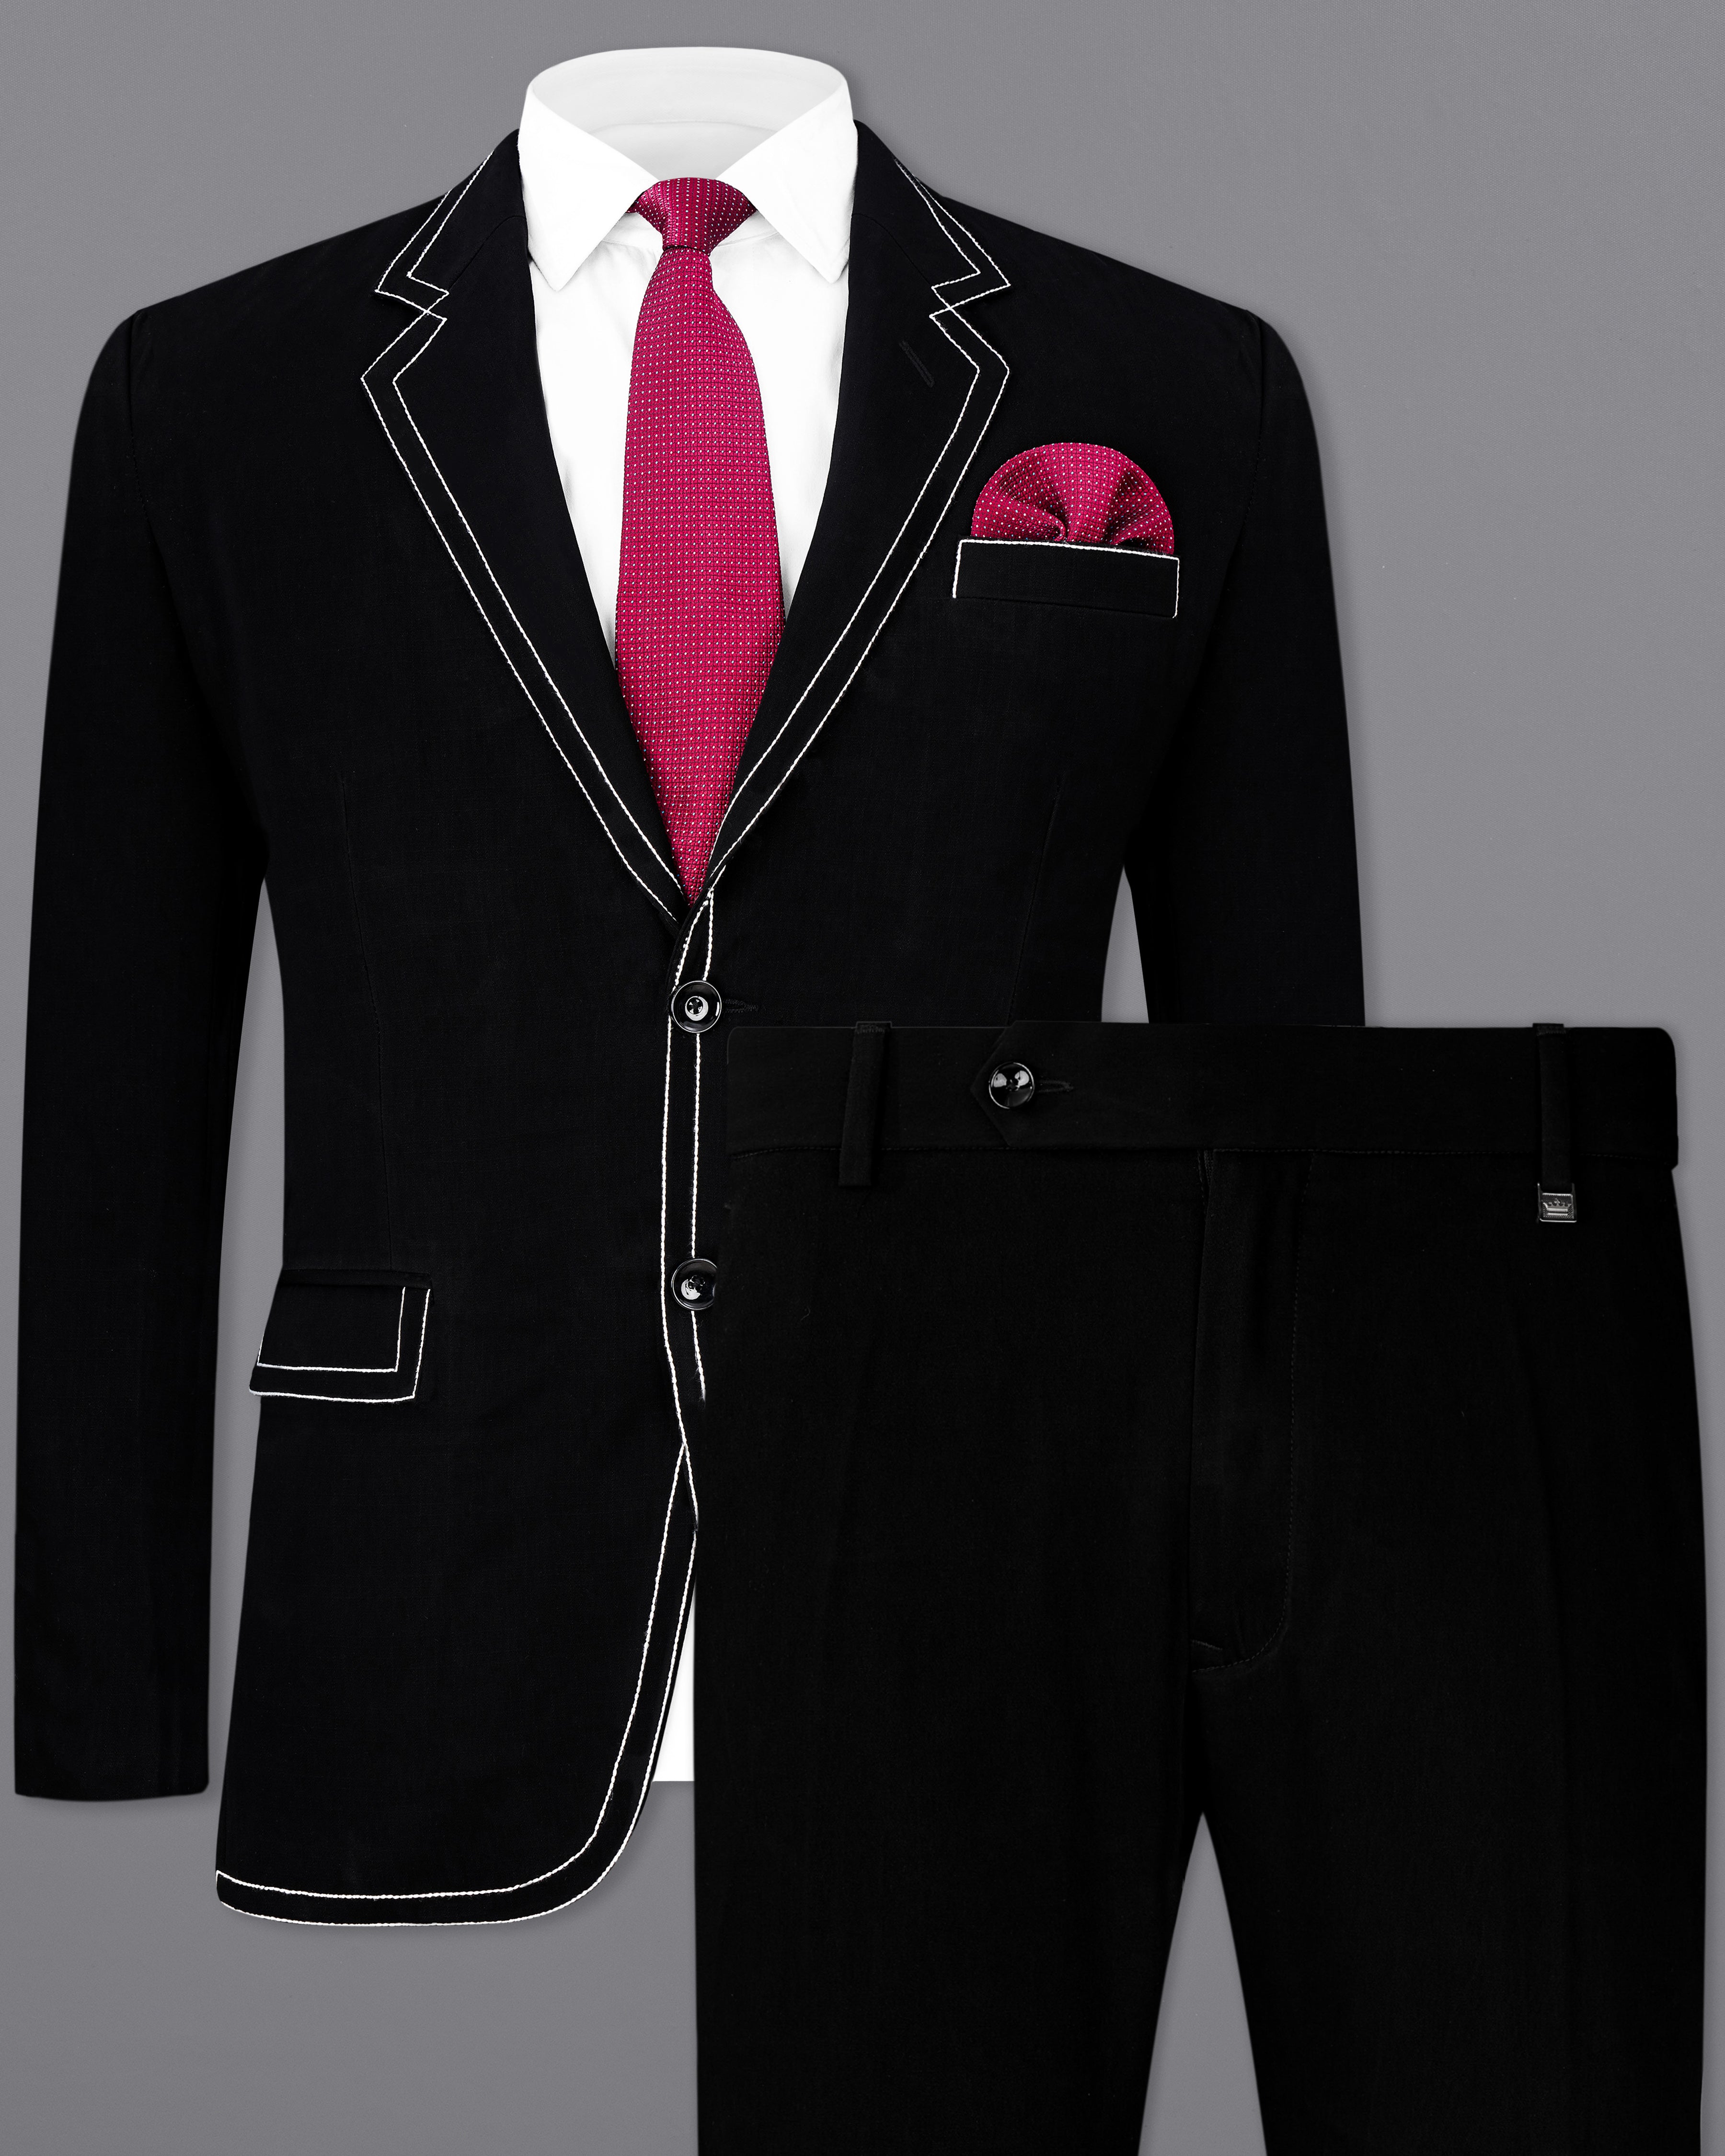 Korean Black ( The Best Black We Have ) with White Threadwork Designer Suit